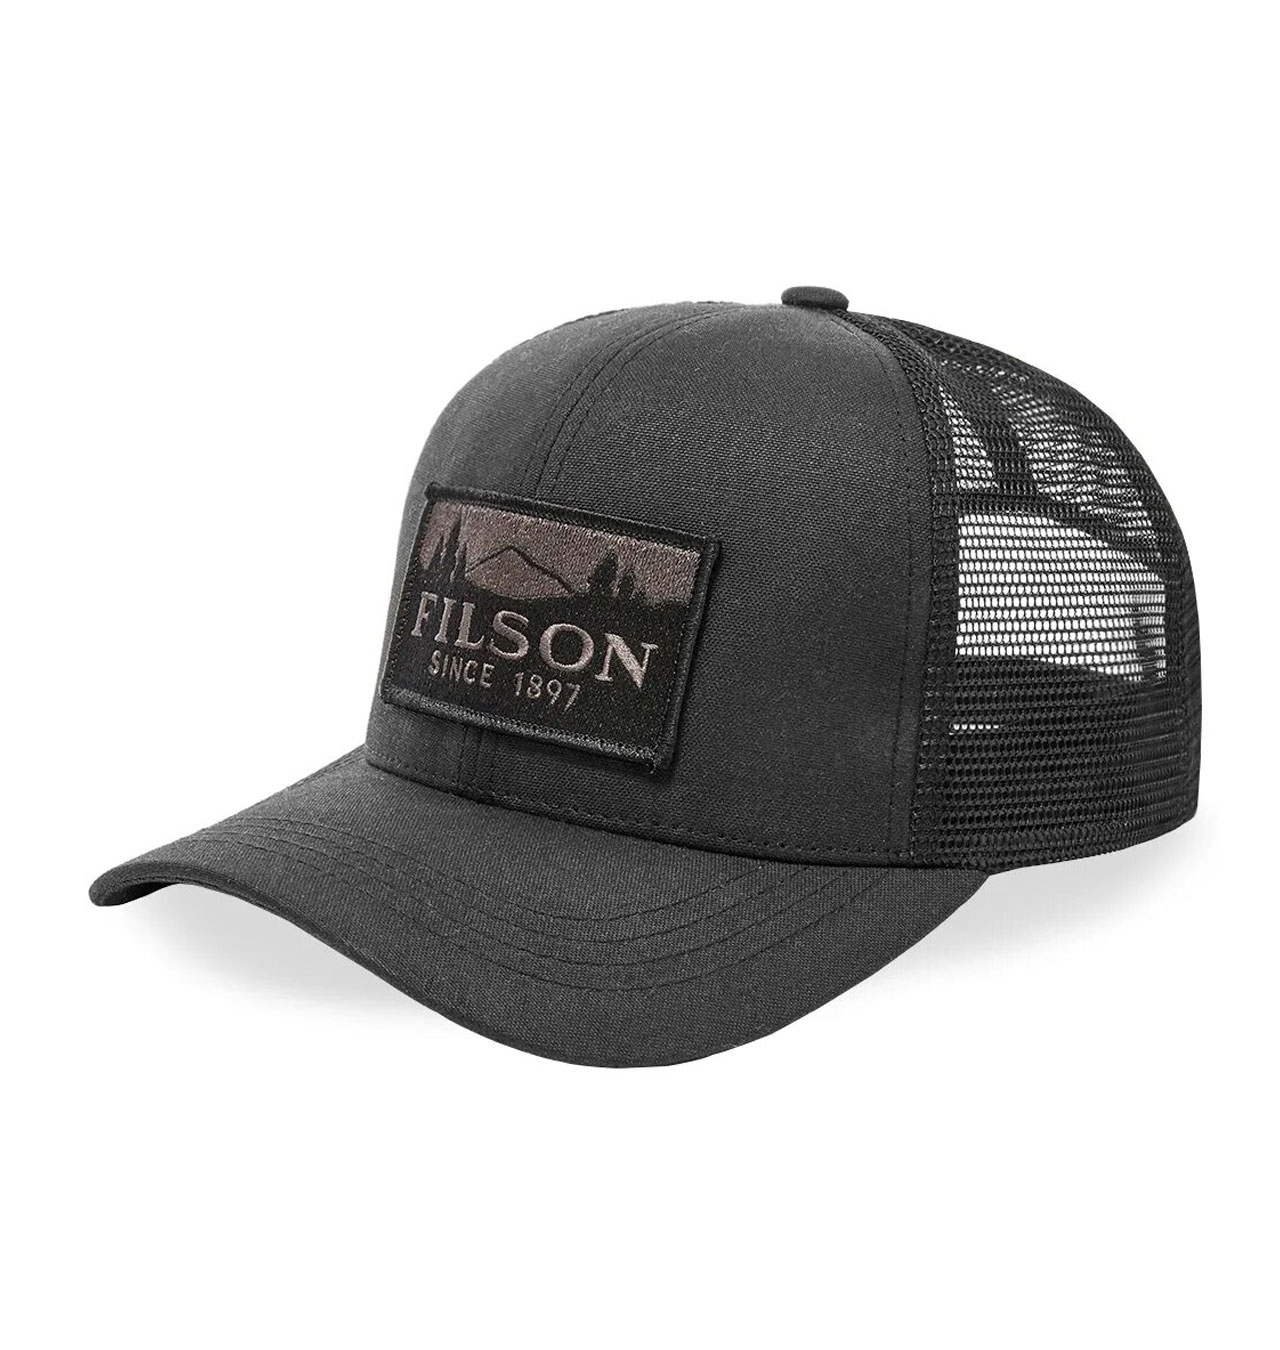 Filson - Logger Mesh Cap - Black